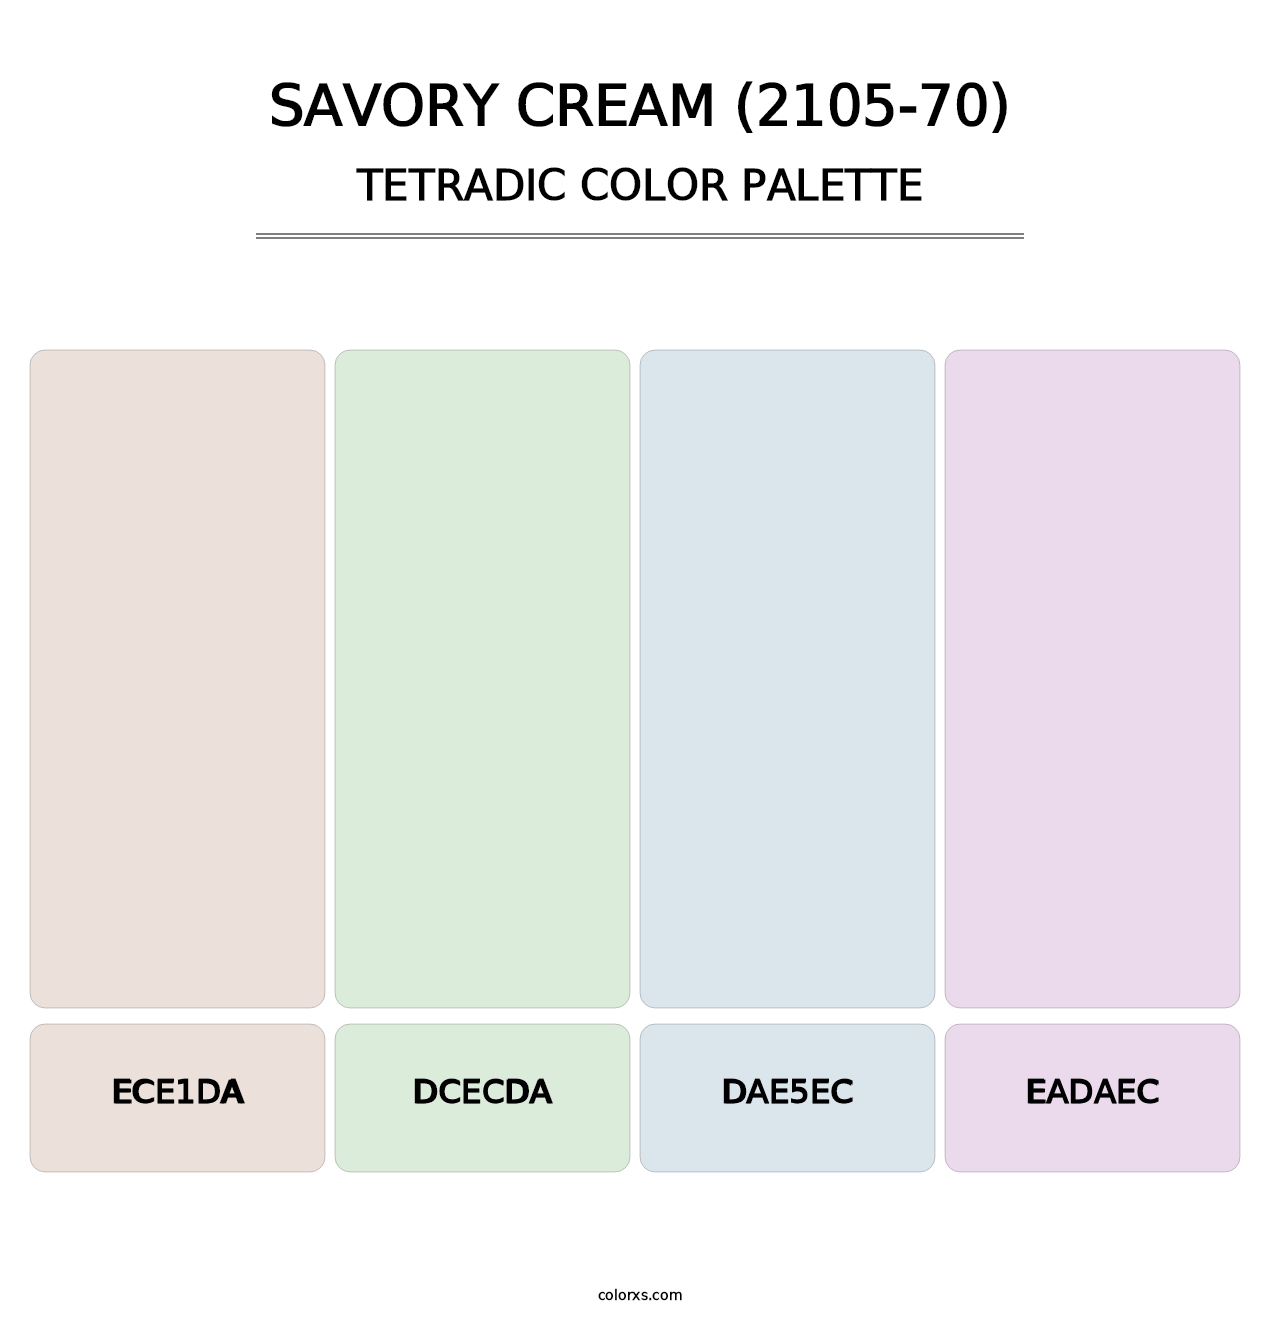 Savory Cream (2105-70) - Tetradic Color Palette